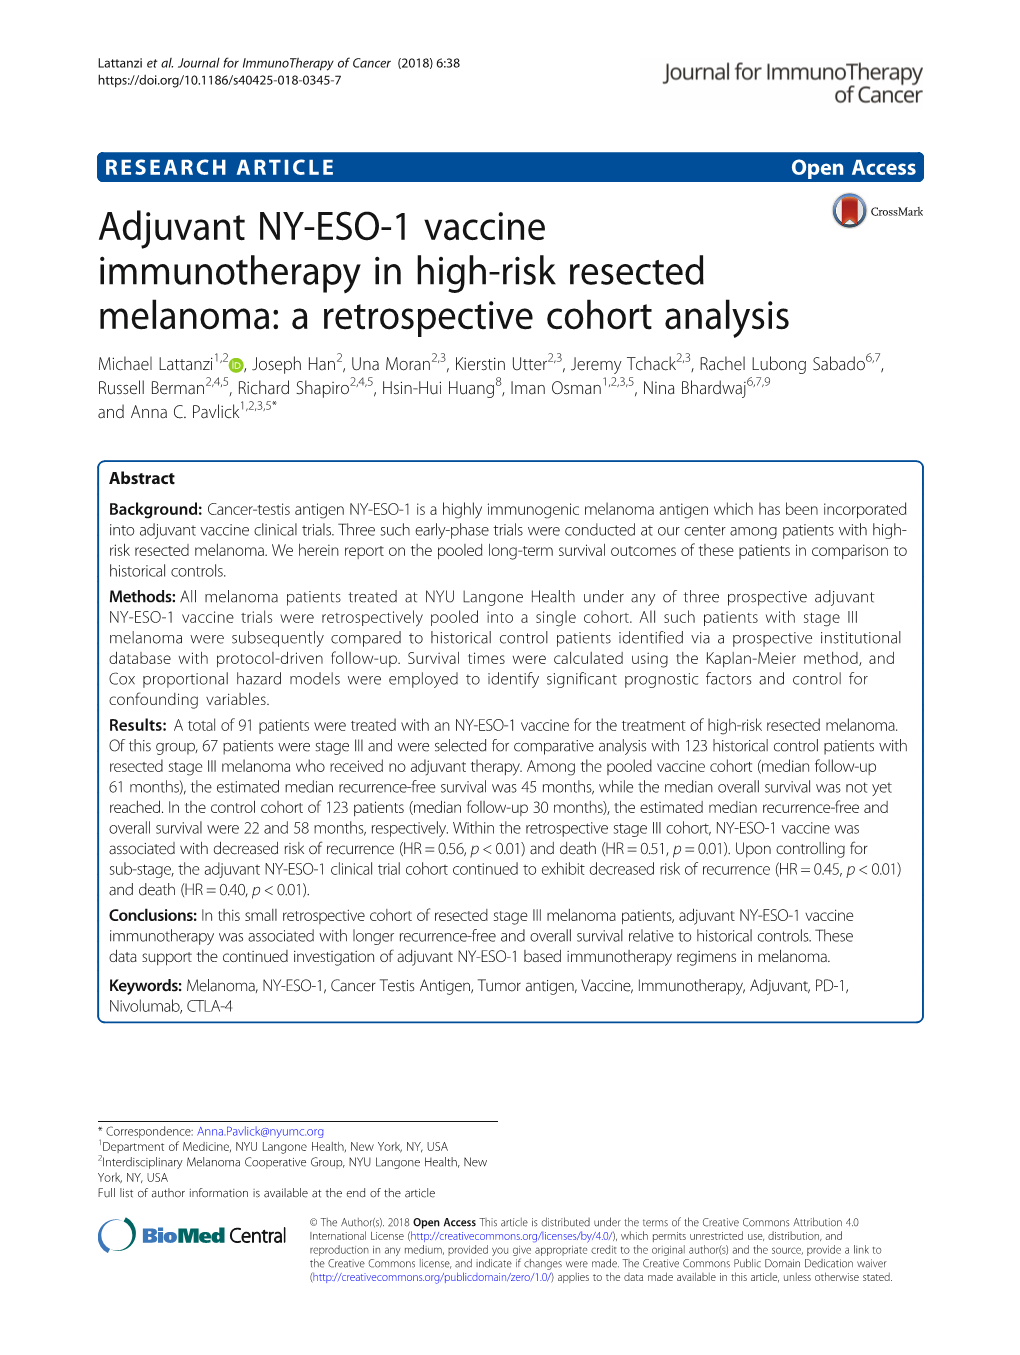 Adjuvant NY-ESO-1 Vaccine Immunotherapy in High-Risk